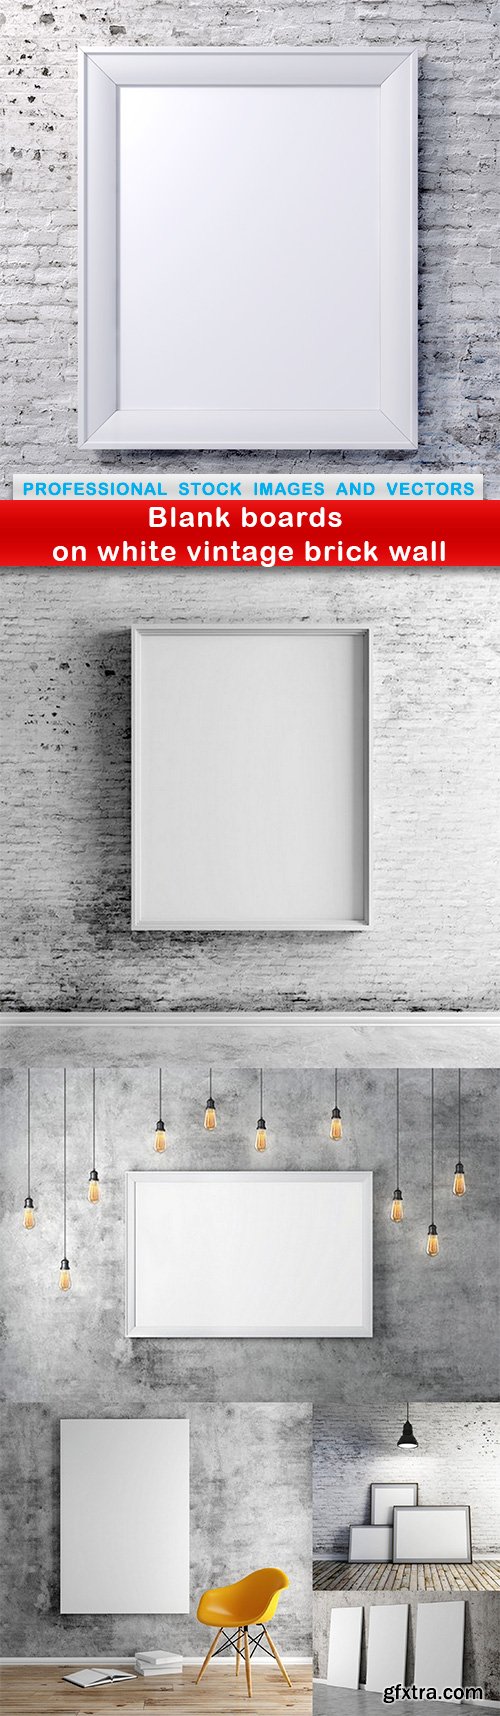 Blank boards on white vintage brick wall - 6 UHQ JPEG